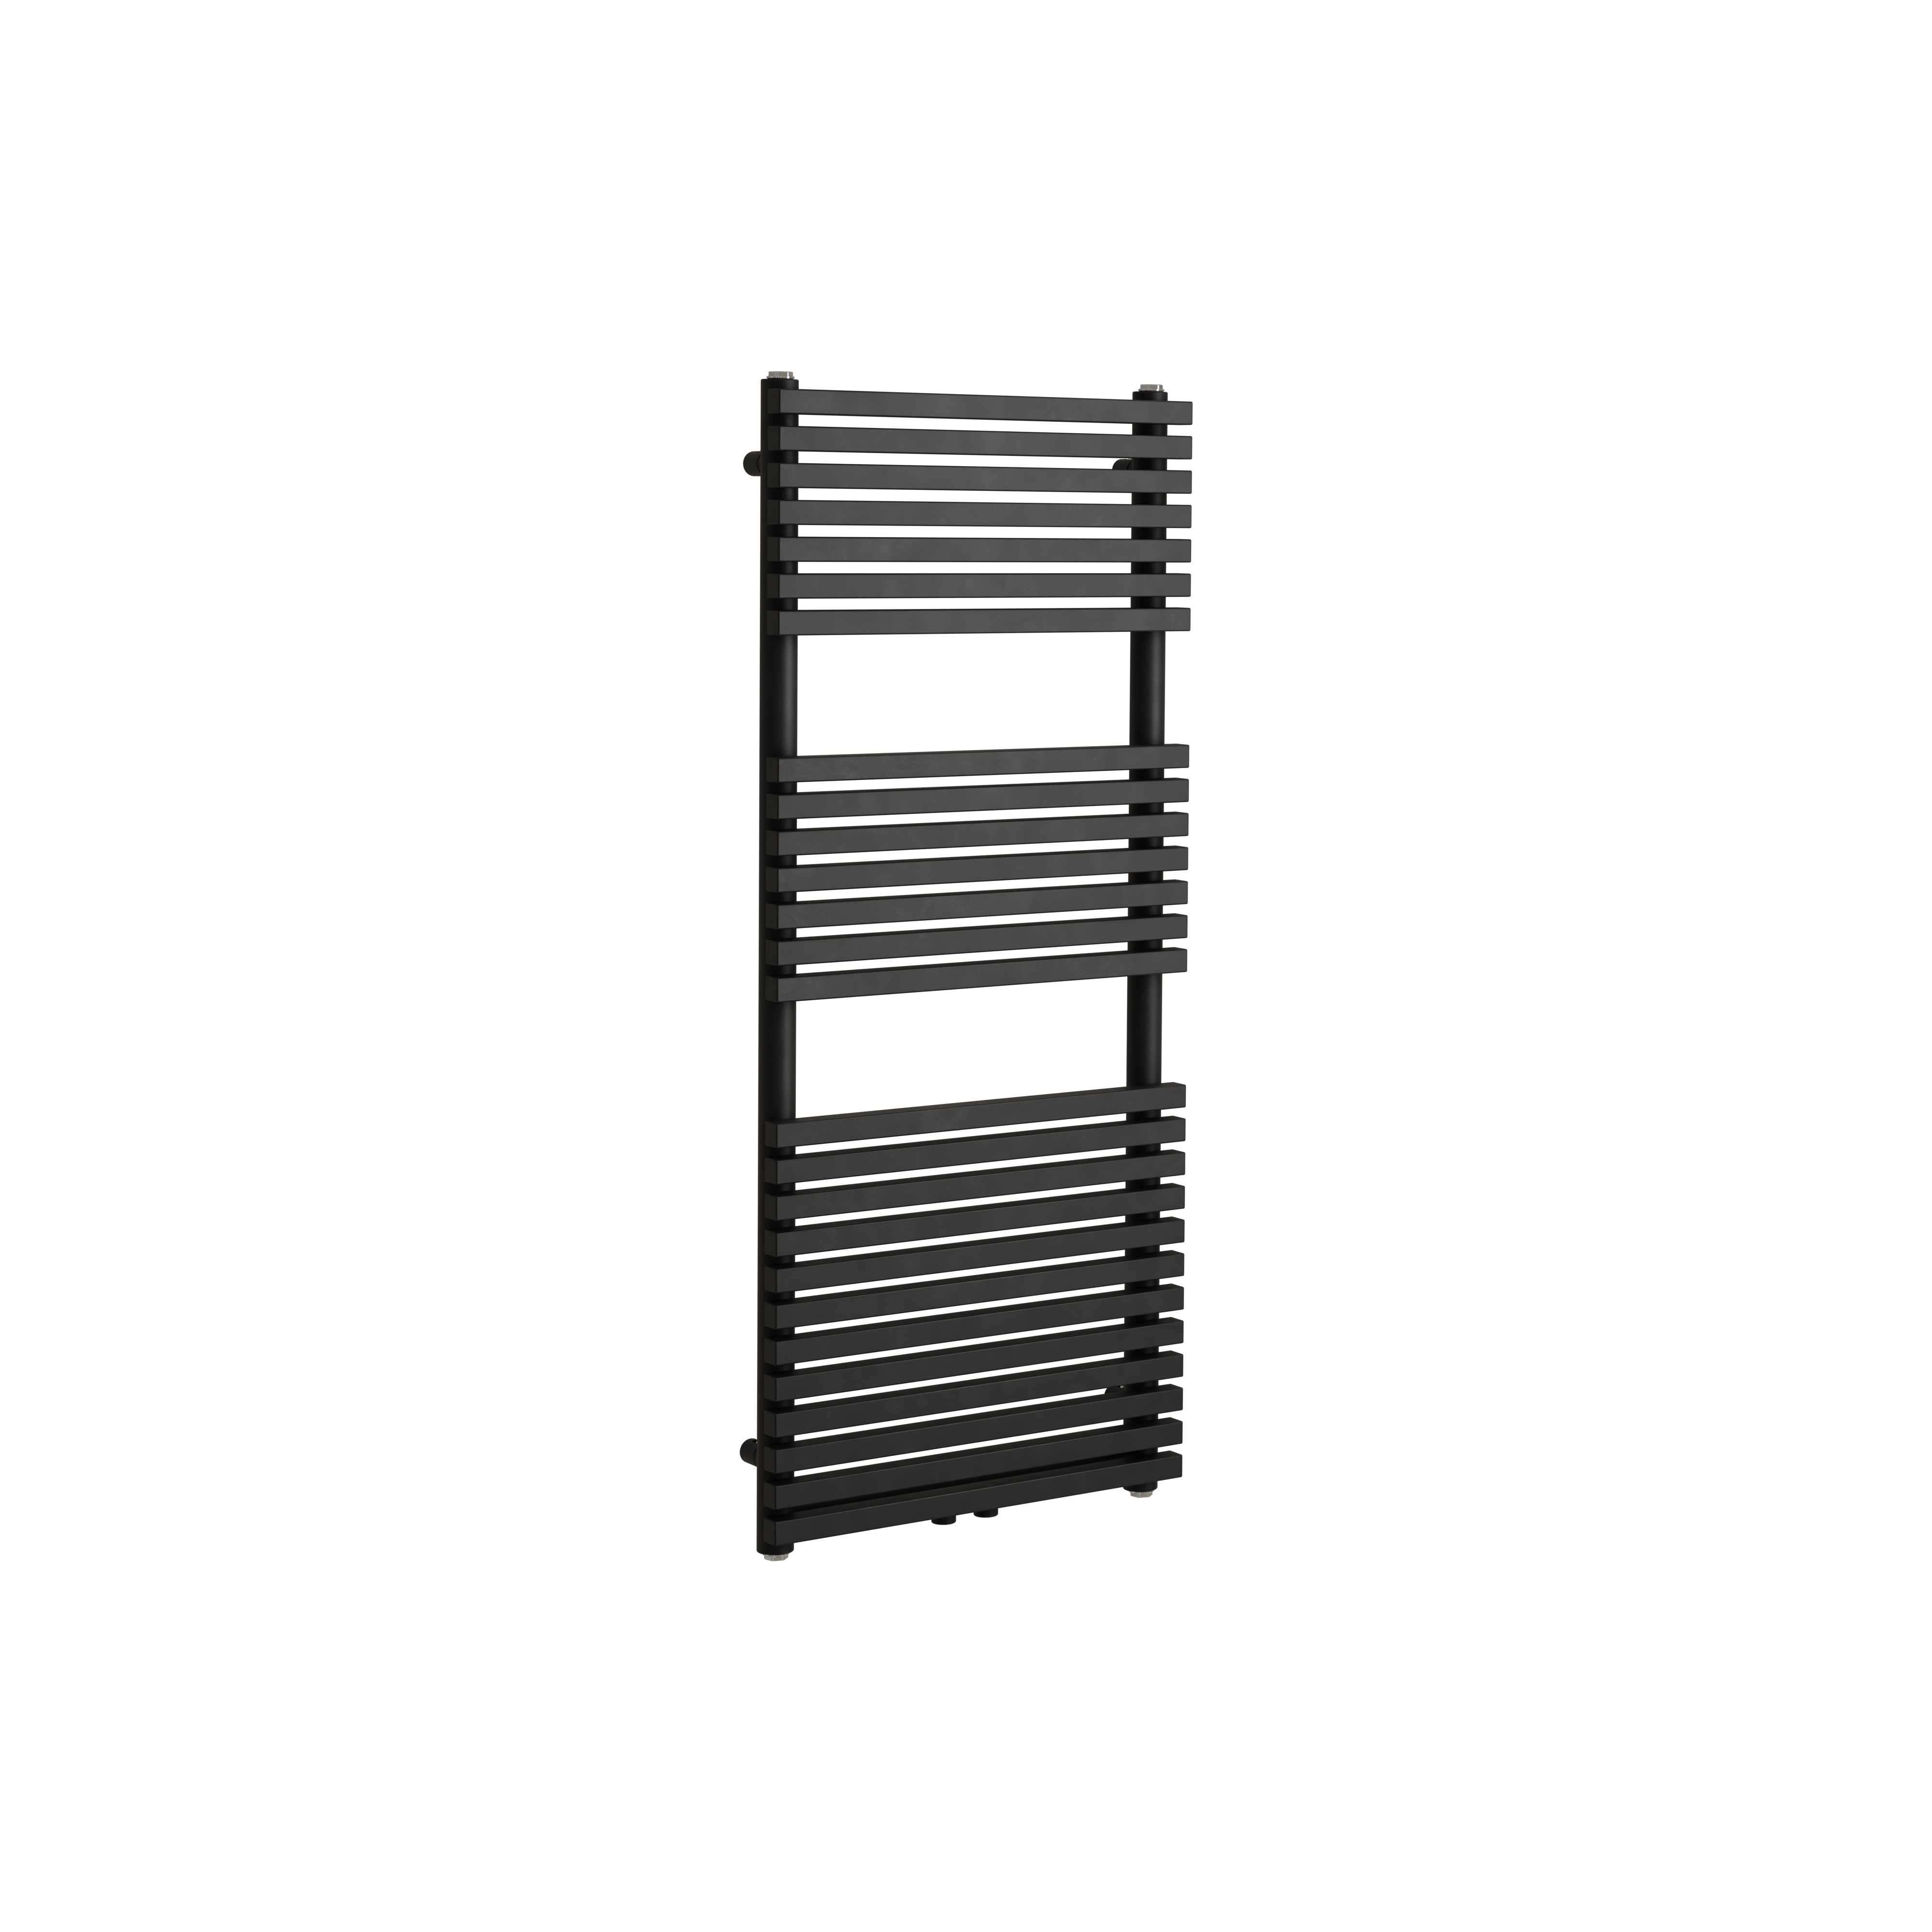 VIPERA Vesuvio handdoekradiator centrale verwarming 50x120cm mat zwart